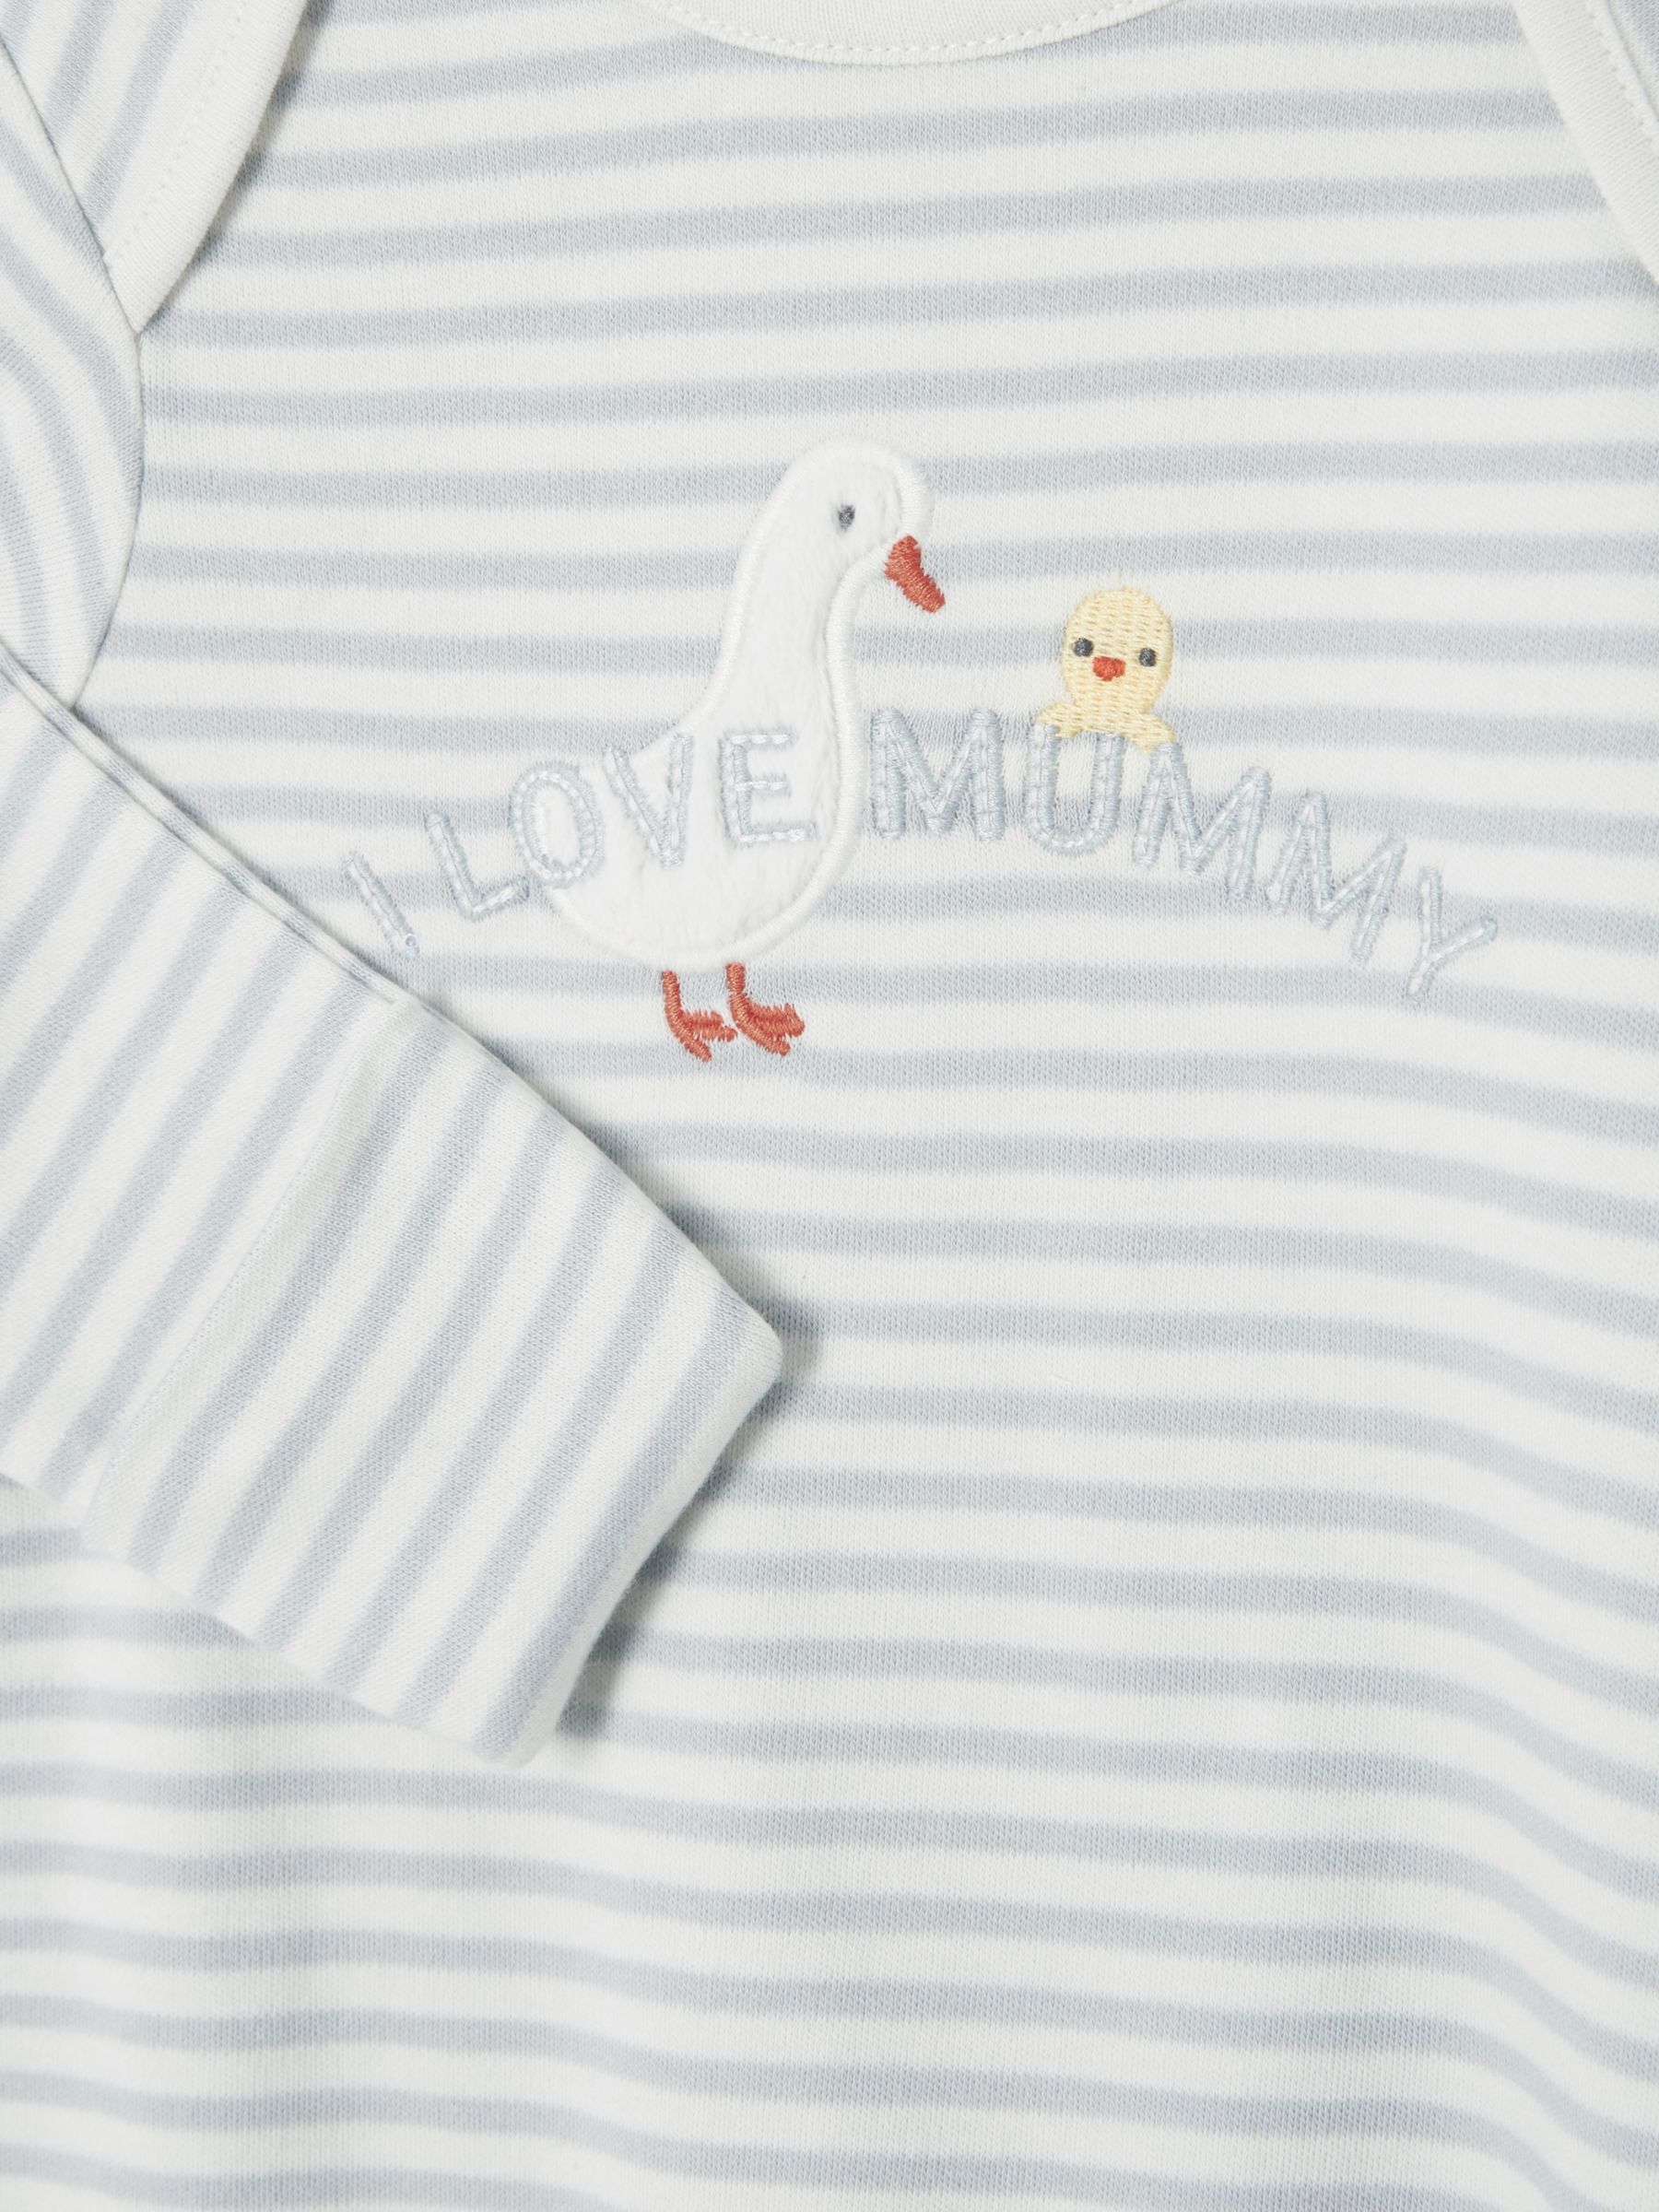 John Lewis Baby I Love Mummy Stripe Sleepsuit, Grey/Cream, 3-6 months